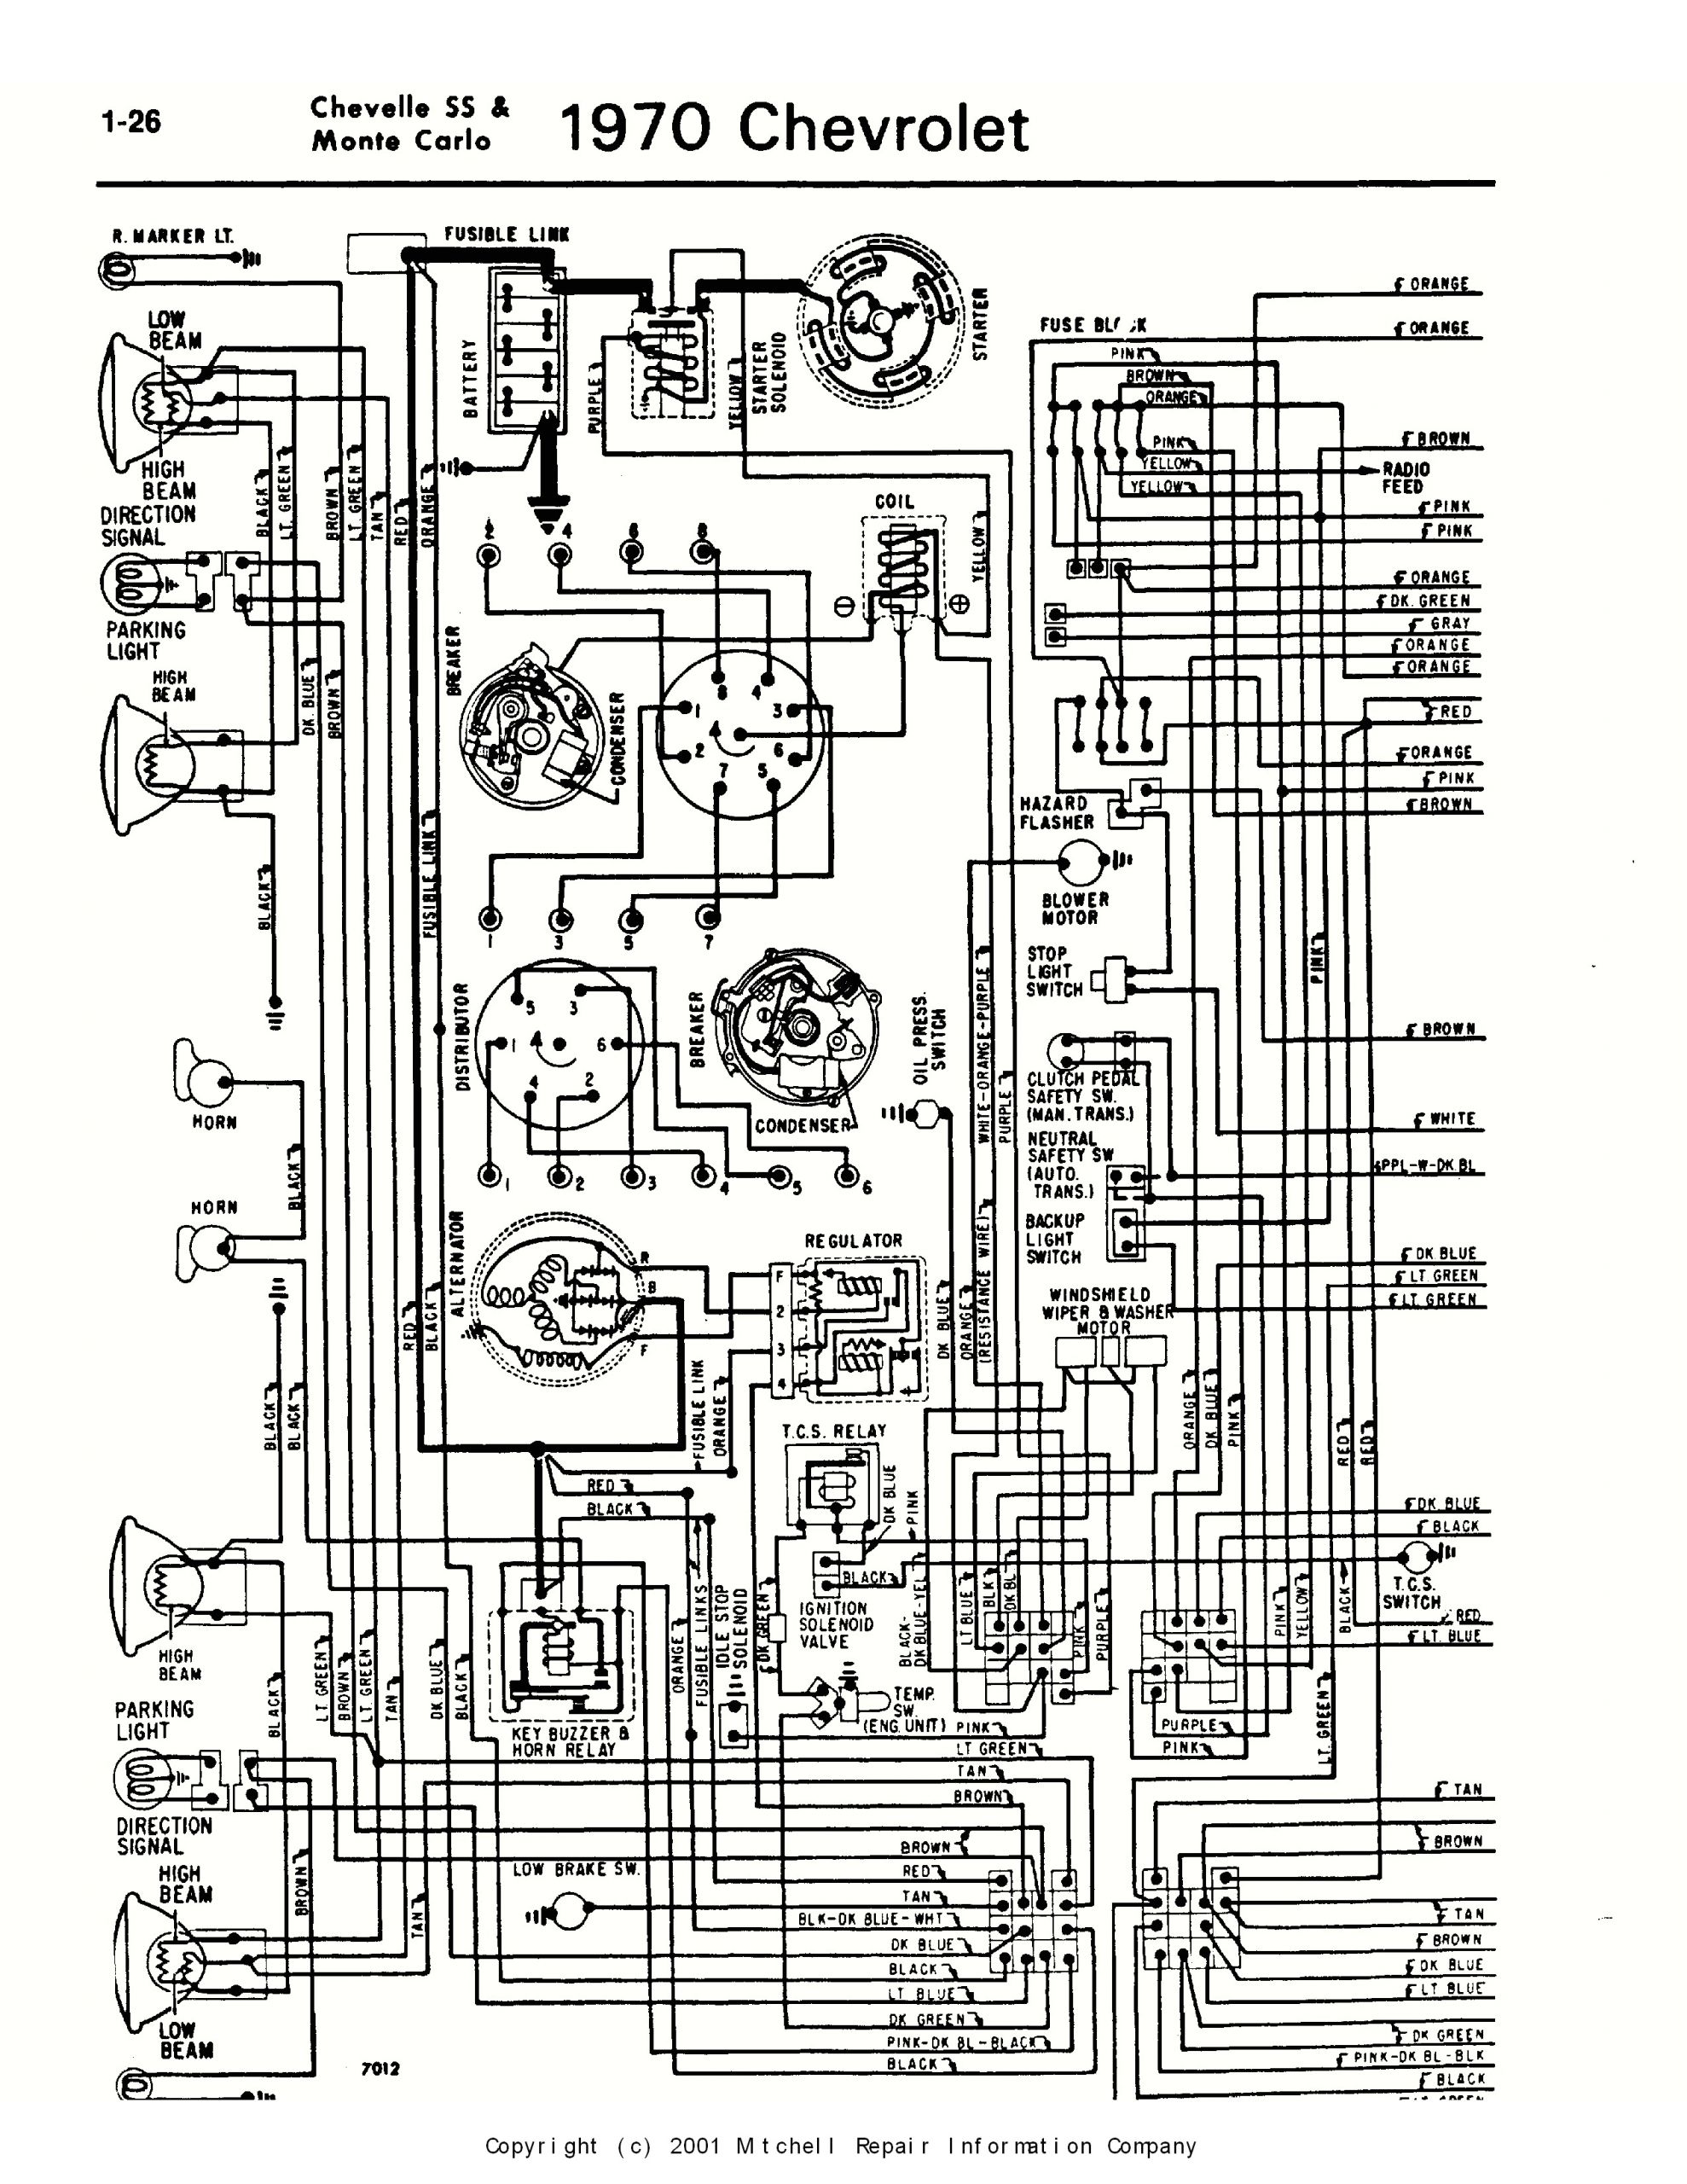 1967 c20 wiring harness diagrams schematics within 1970 chevy c10 diagram at 1970 chevy c10 wiring diagram jpg